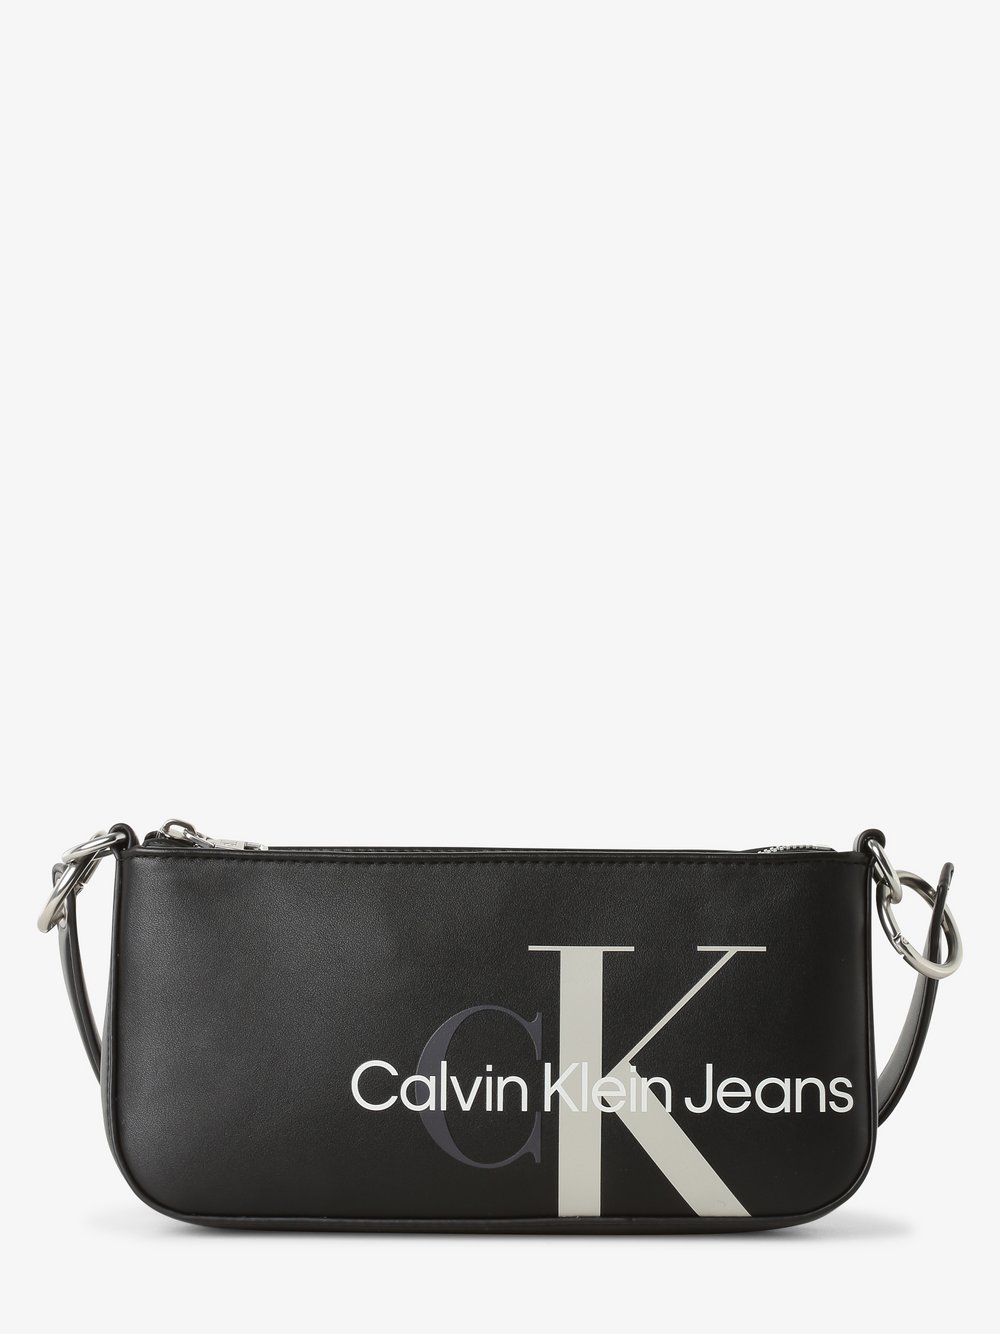 Calvin Klein Jeans - Torebka damska, czarny